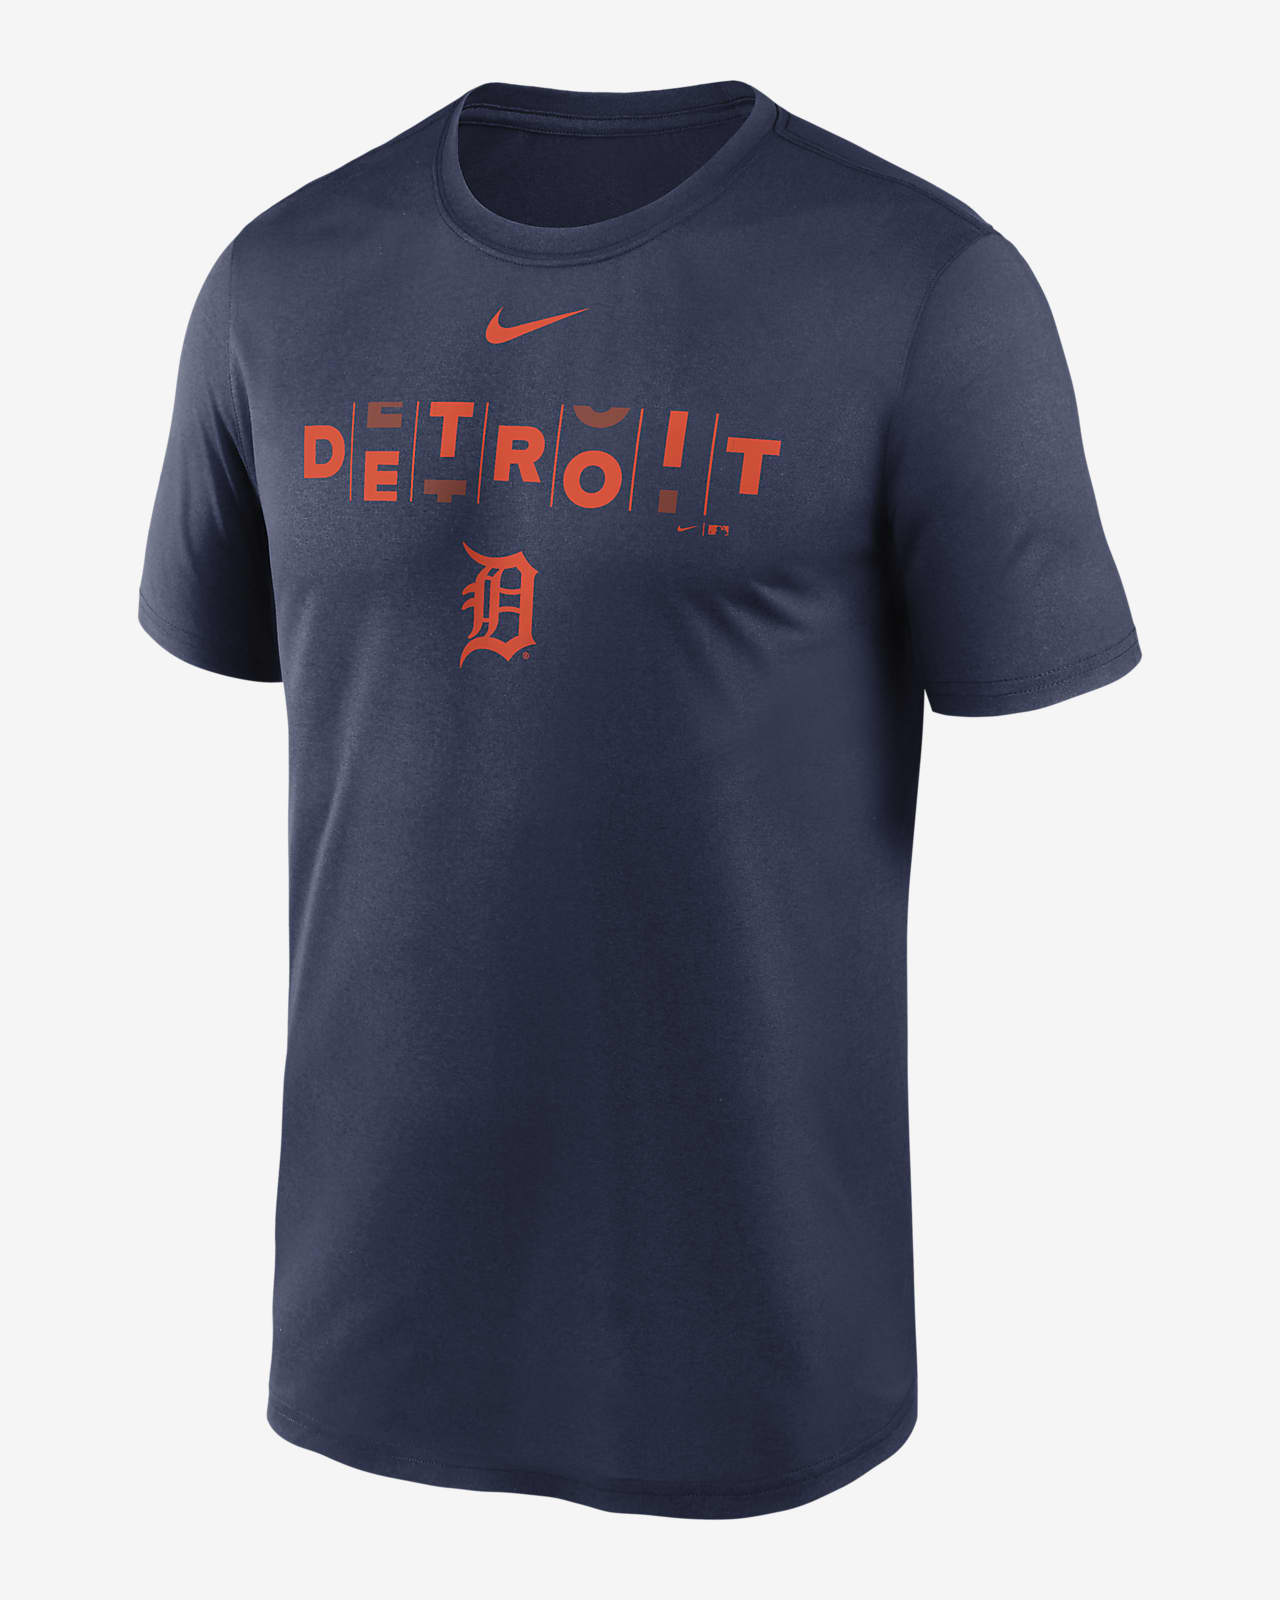 MLB Detroit Tigers Boys' Poly T-Shirt - L